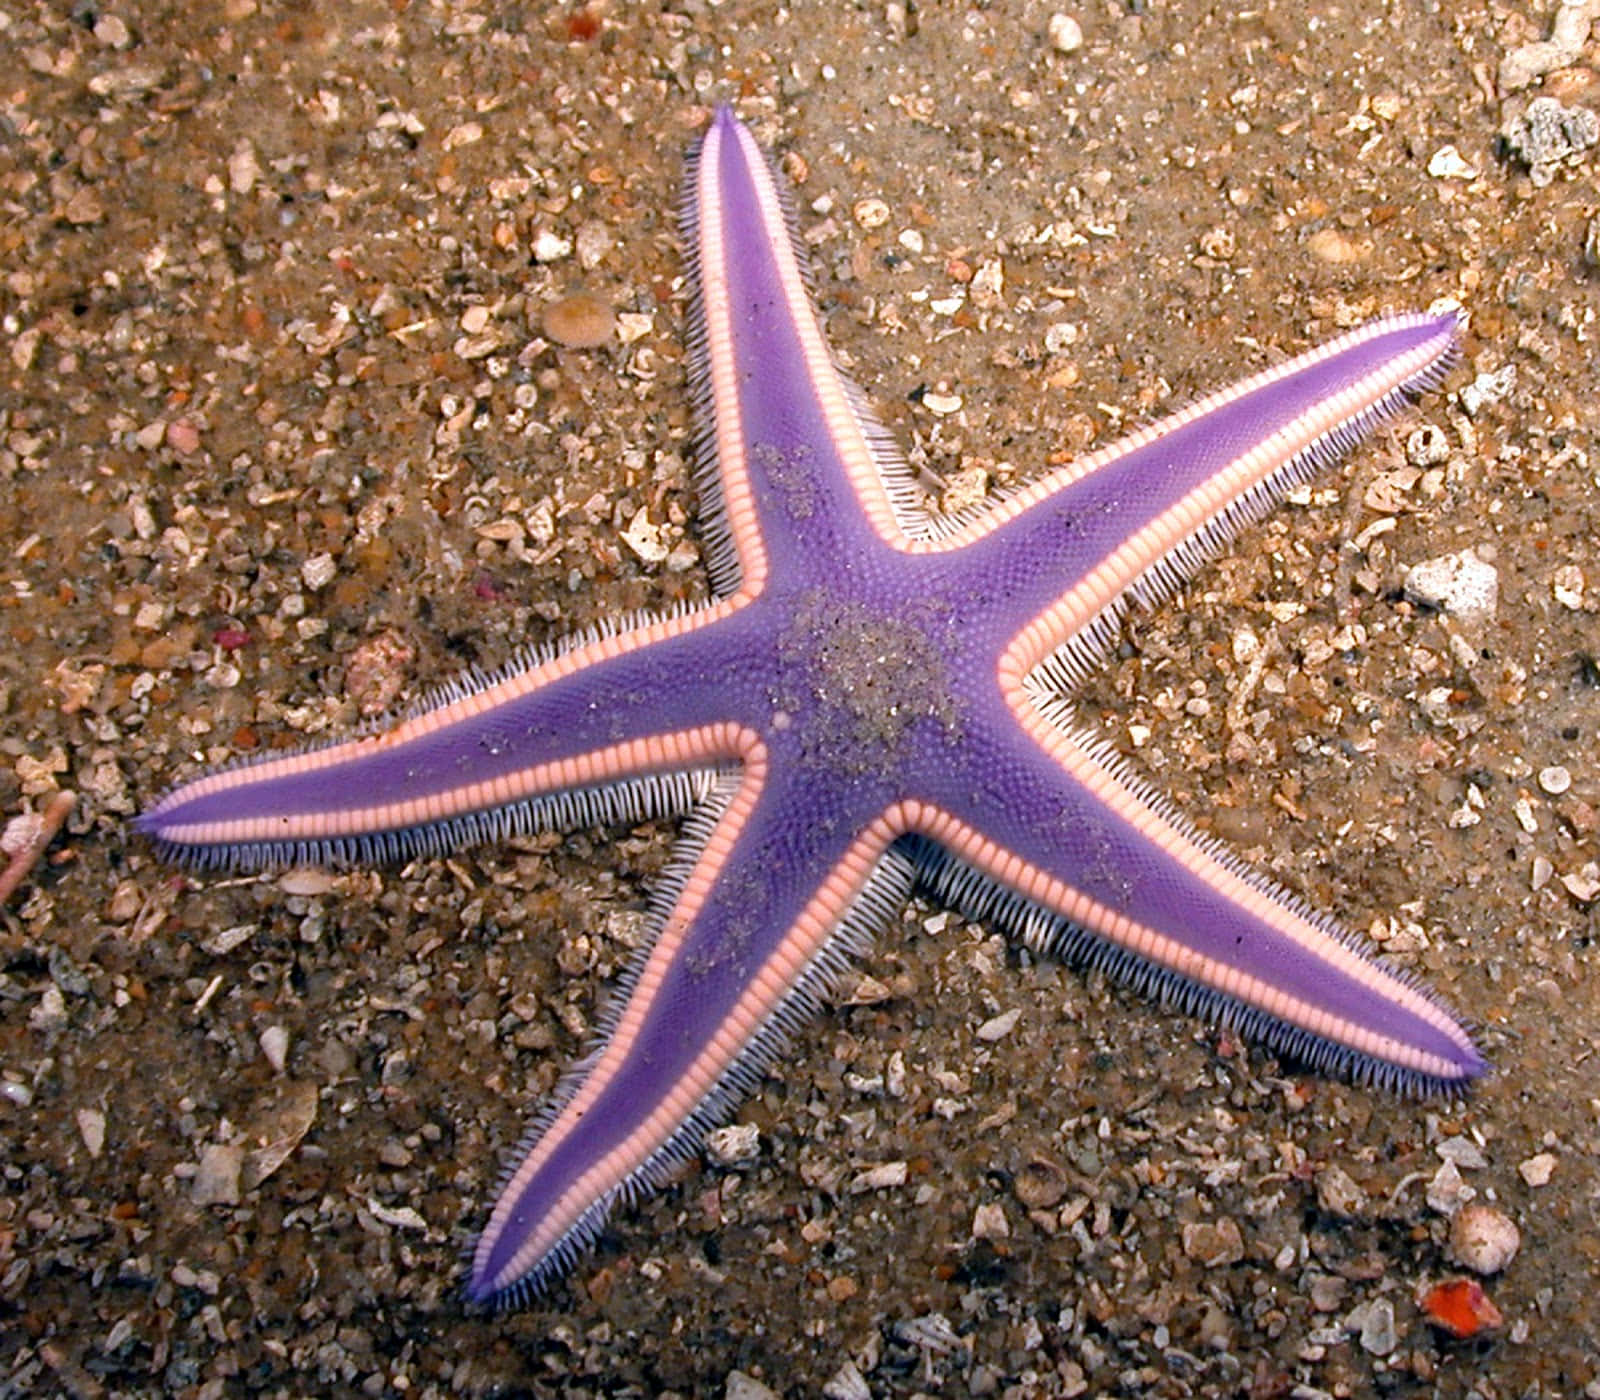 Eye-catching views of Starfish in the pristine ocean